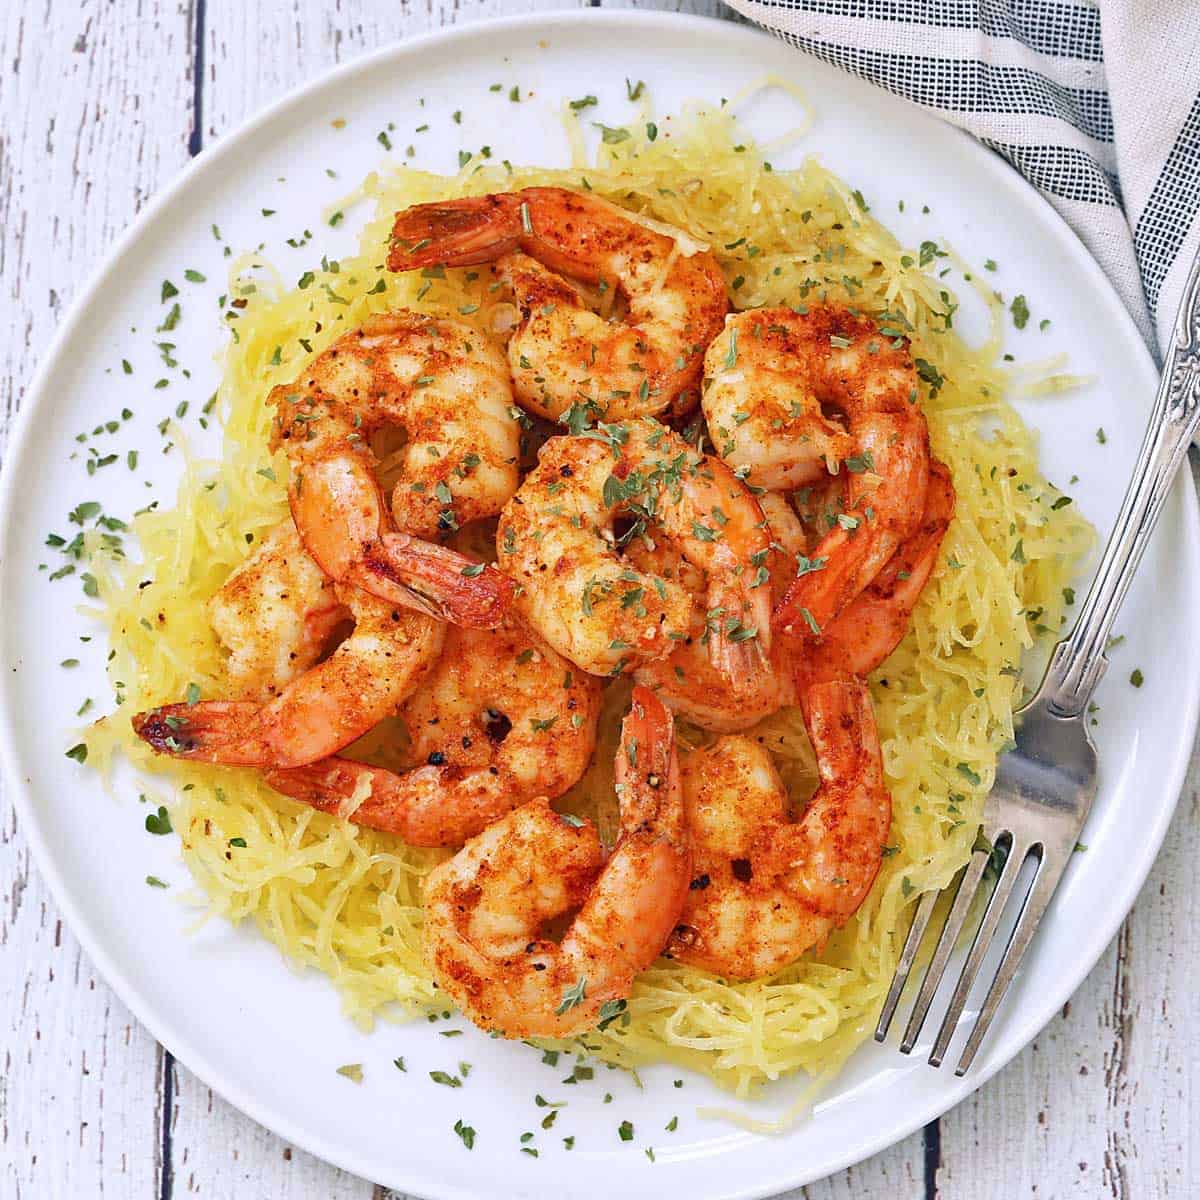 Sauteed shrimp are served on to pof spaghetti squash.